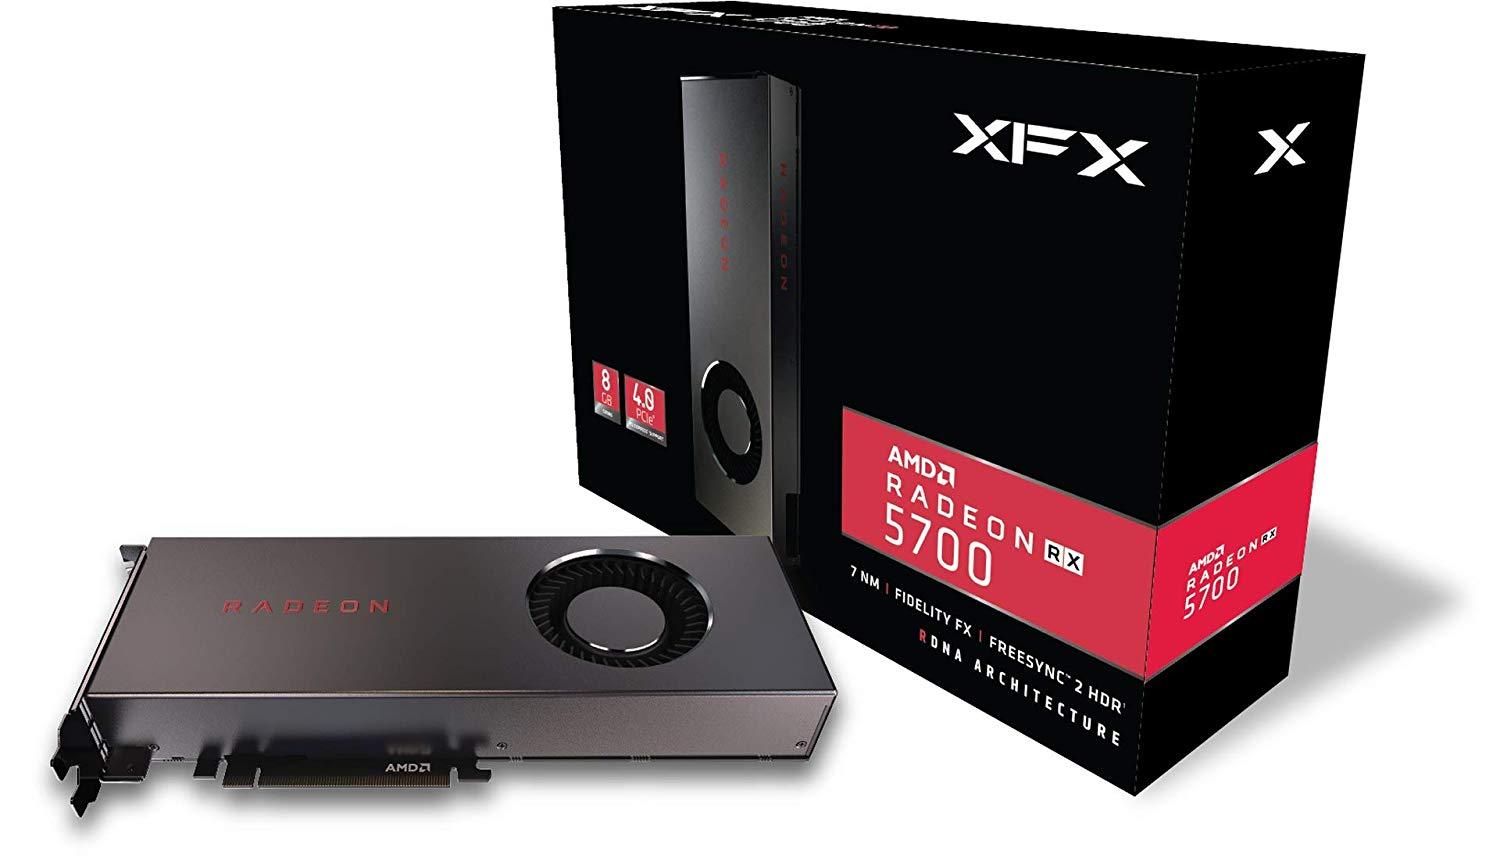 XFX Radeon RX 5700 8GB GDDR5 PCI-E Gen 3x4 - Graphics Card - Store 974 | ستور ٩٧٤